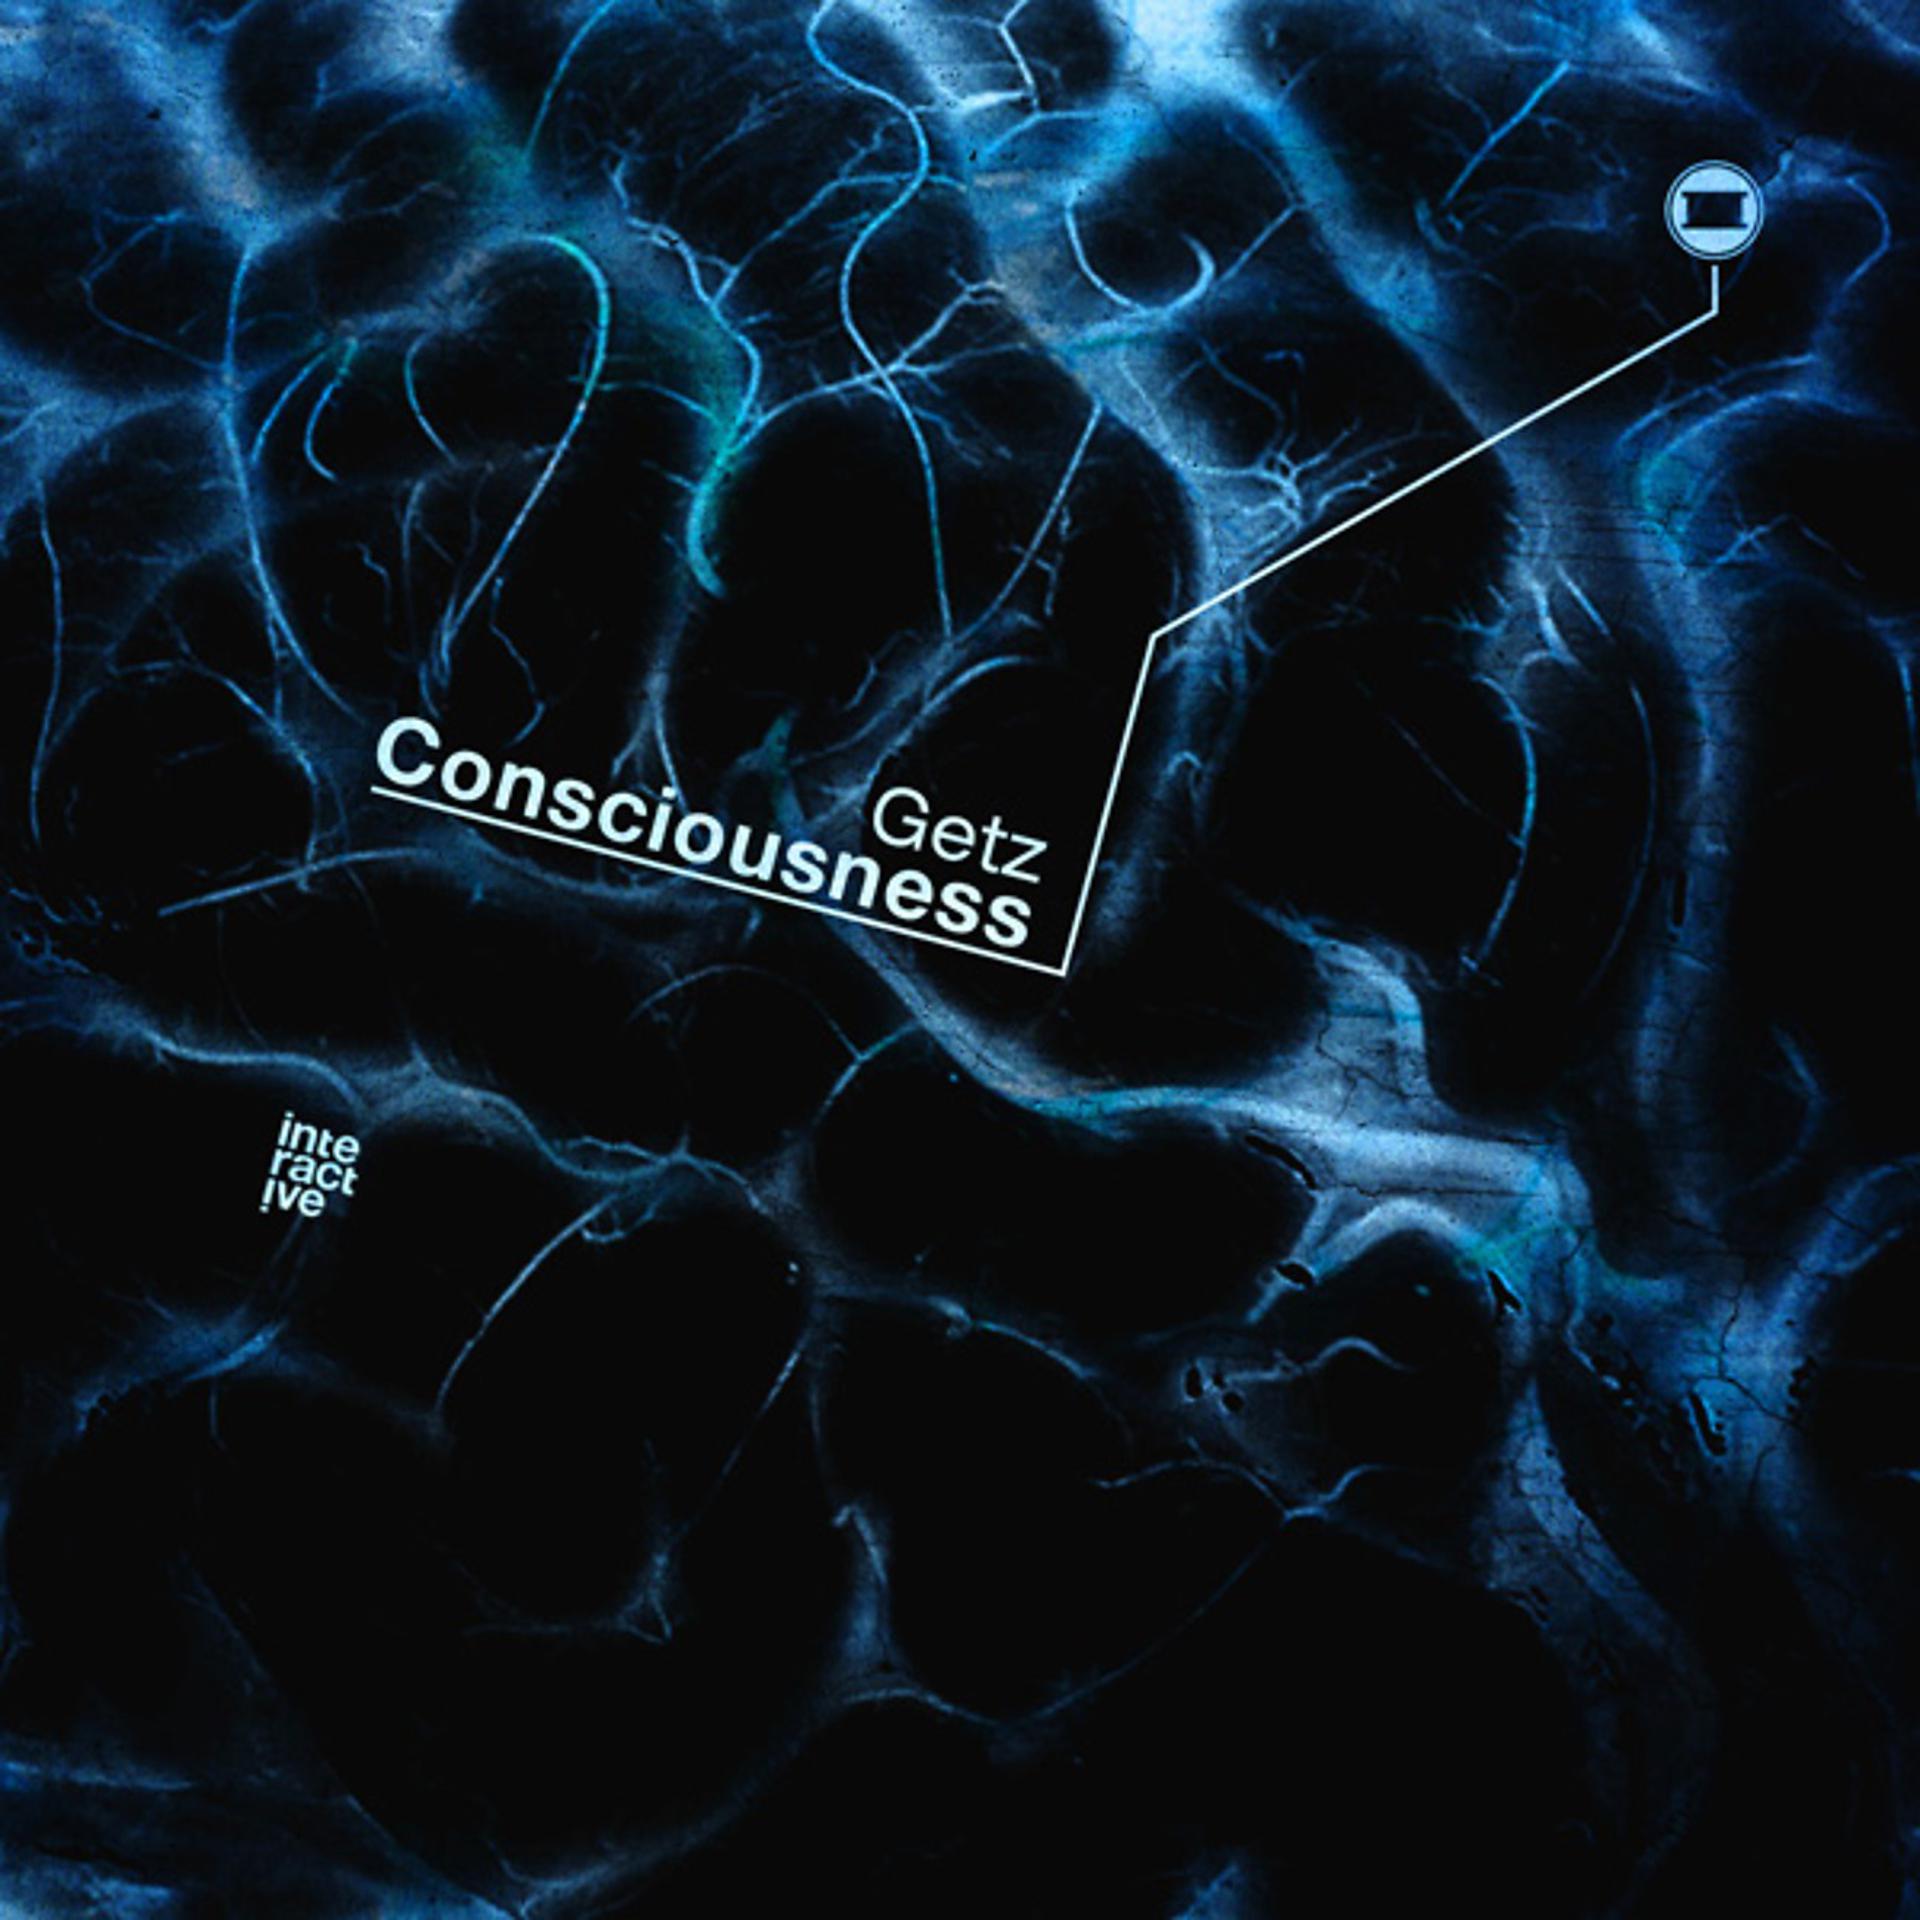 Постер к треку Getz - Consciousness